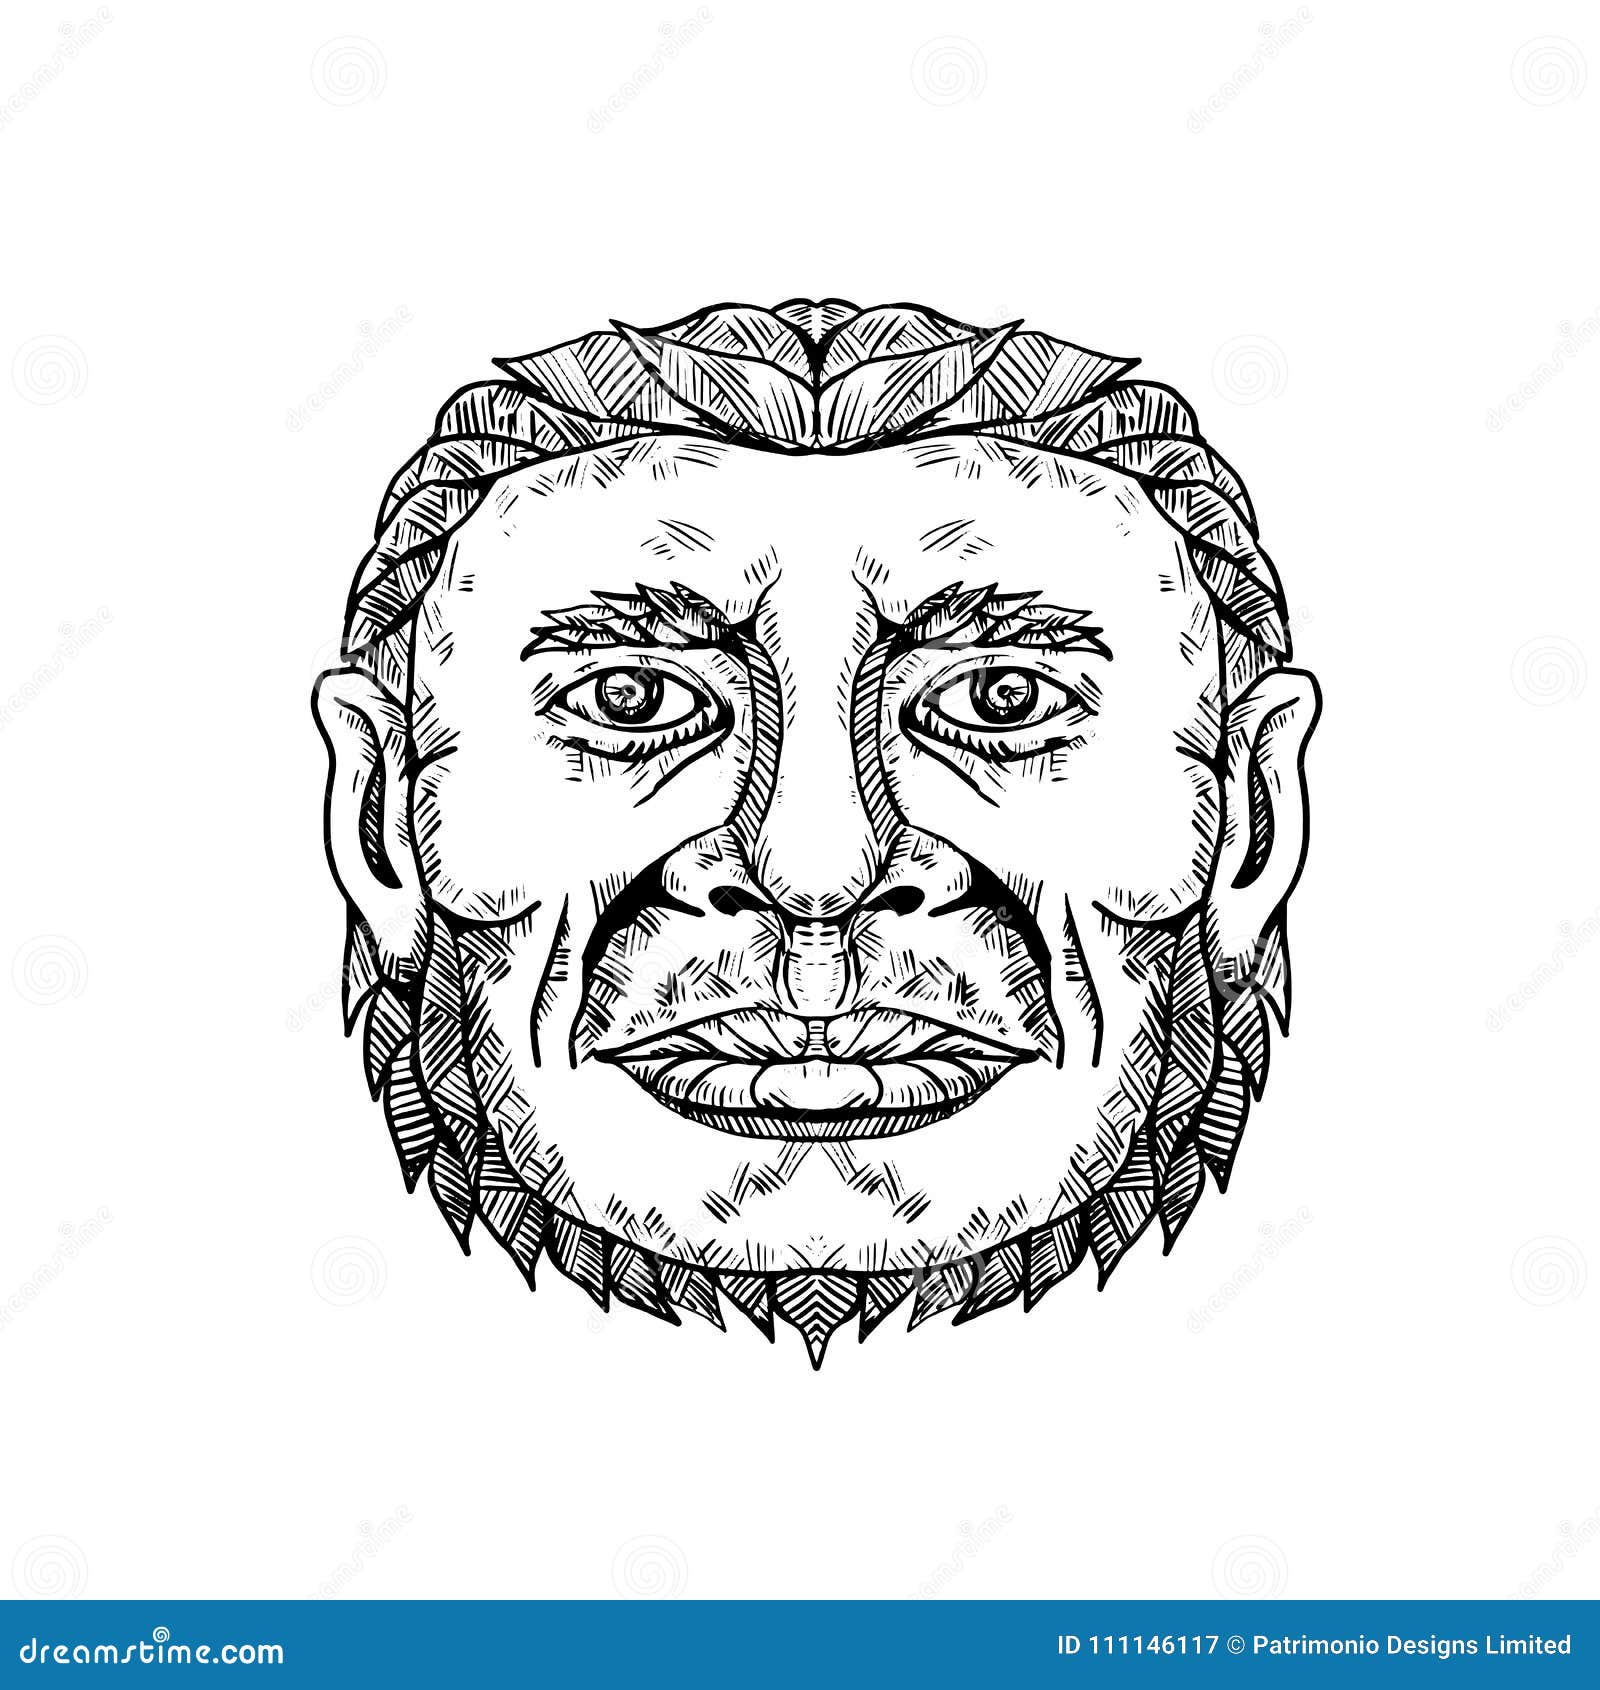 neanderthal male head doodle art